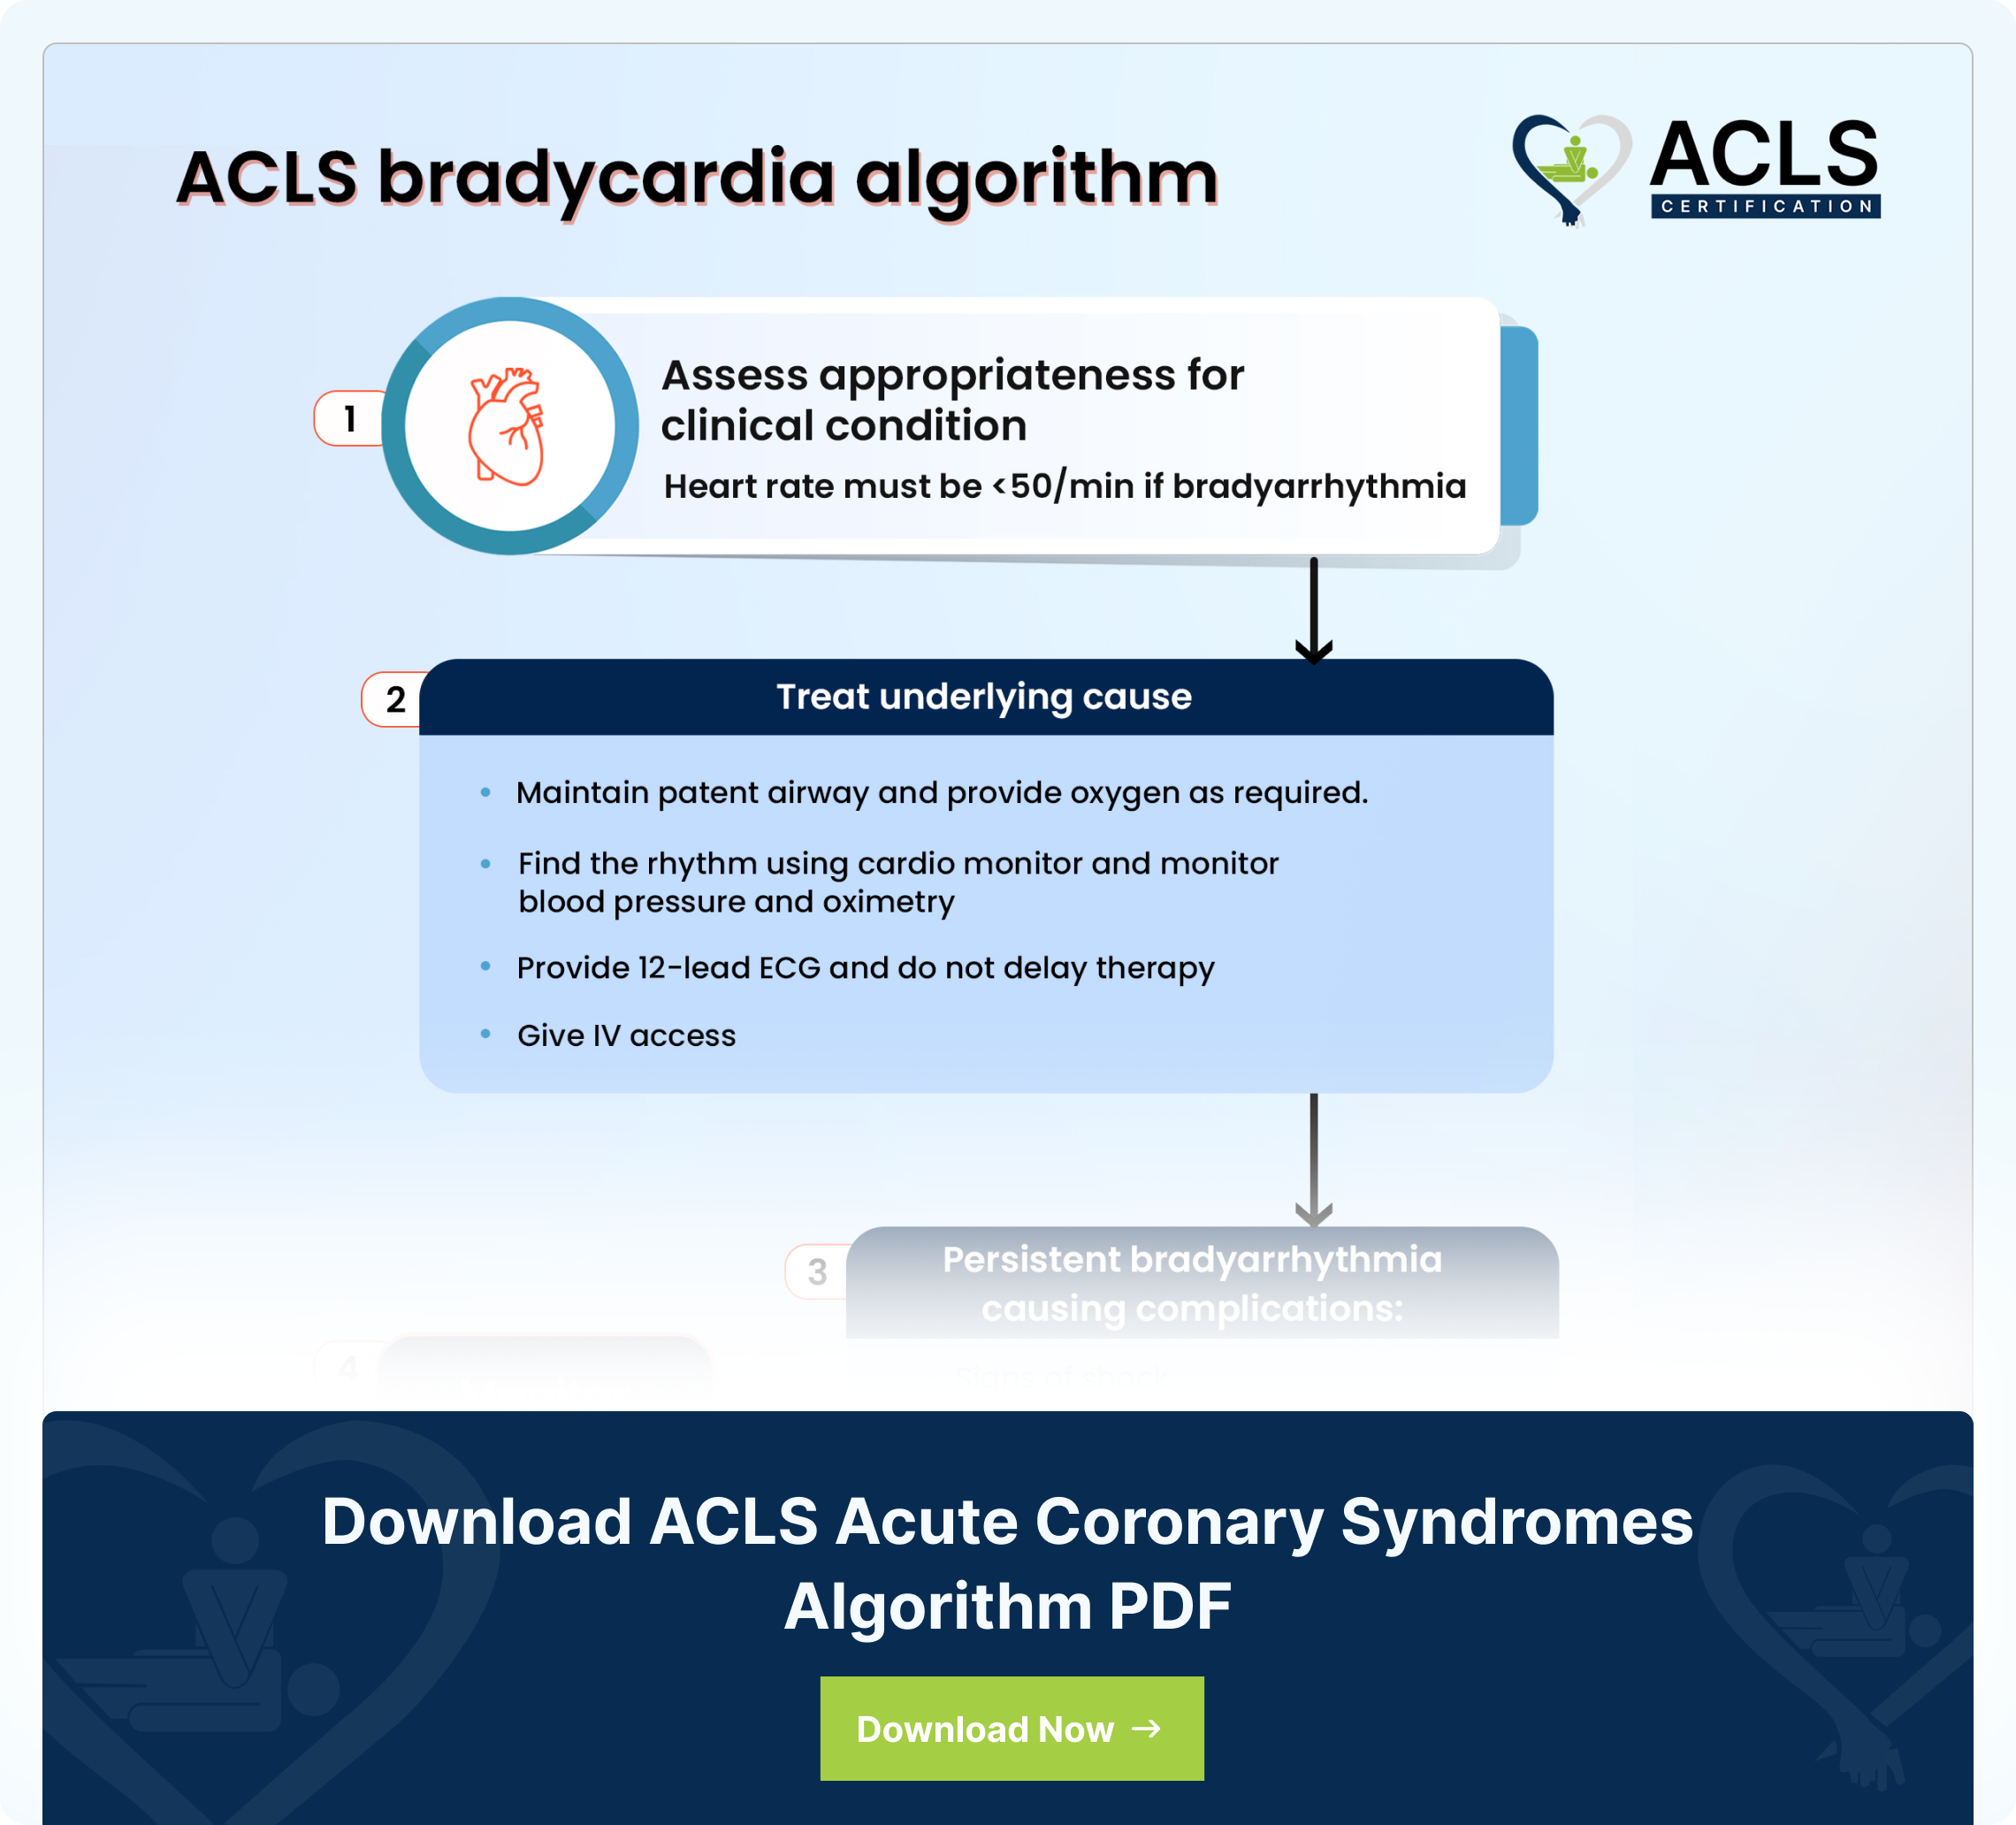 ACLS subalgo bradycardia algorithm